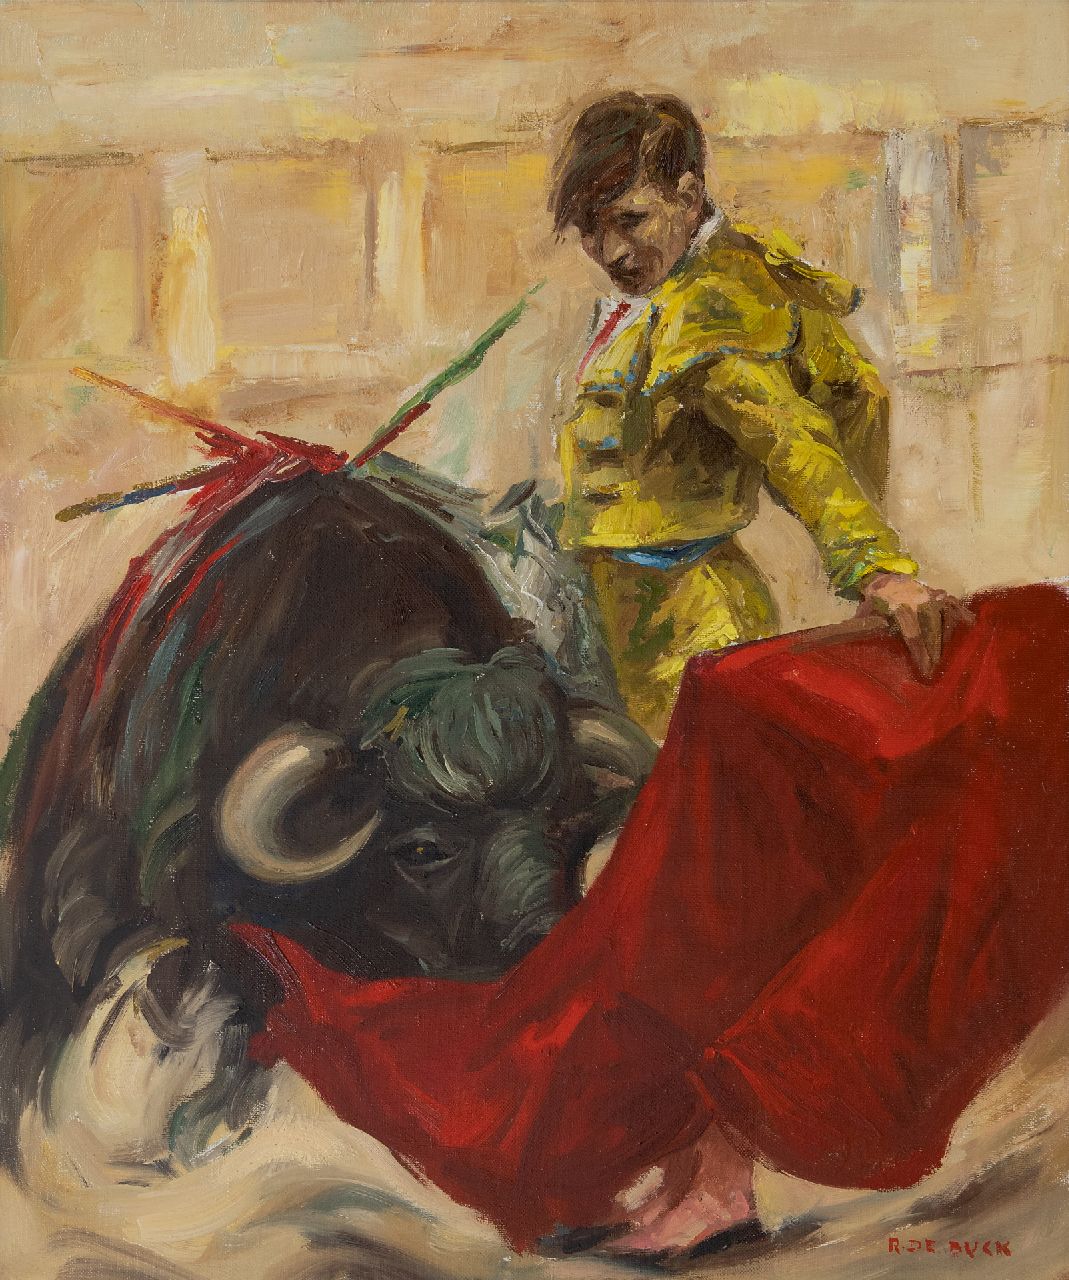 Buck R. de | Raphaël de Buck | Paintings offered for sale | Bullfighter, oil on canvas 60.0 x 49.8 cm, signed l.r.